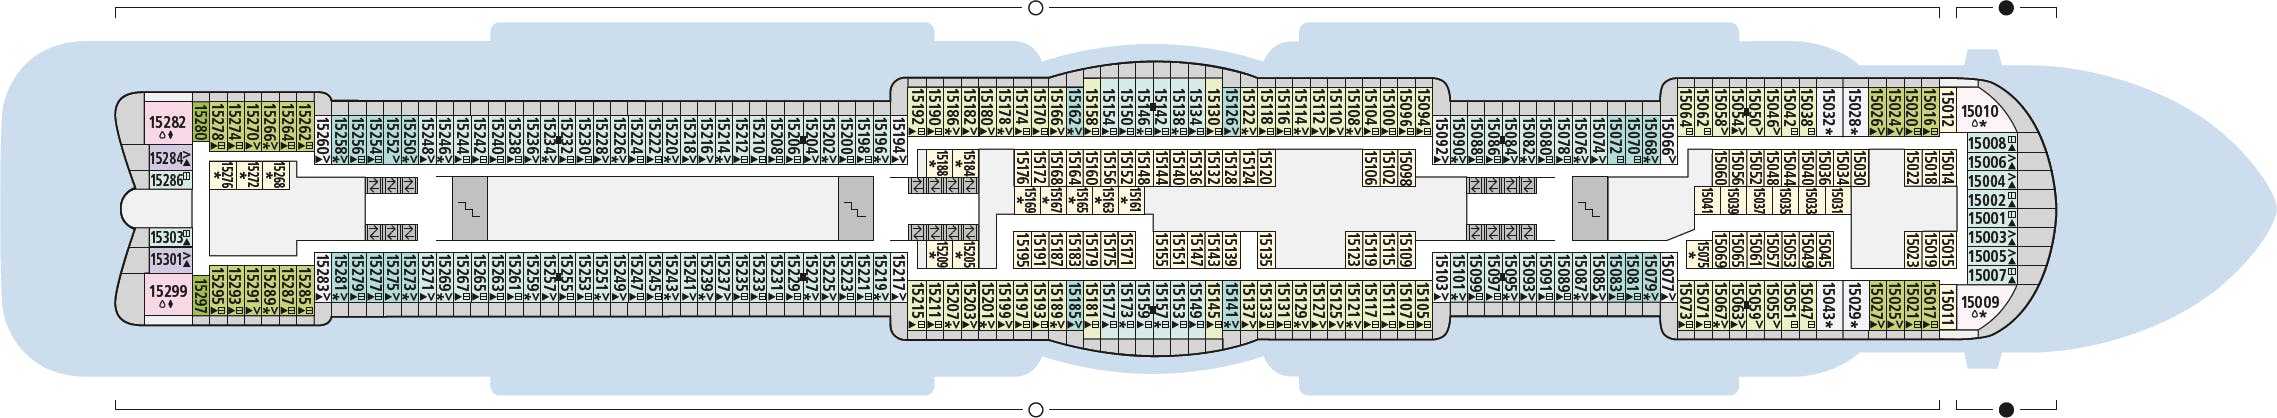 AIDAcosma - AIDA Cruises - Deck 15 (Deck 15)